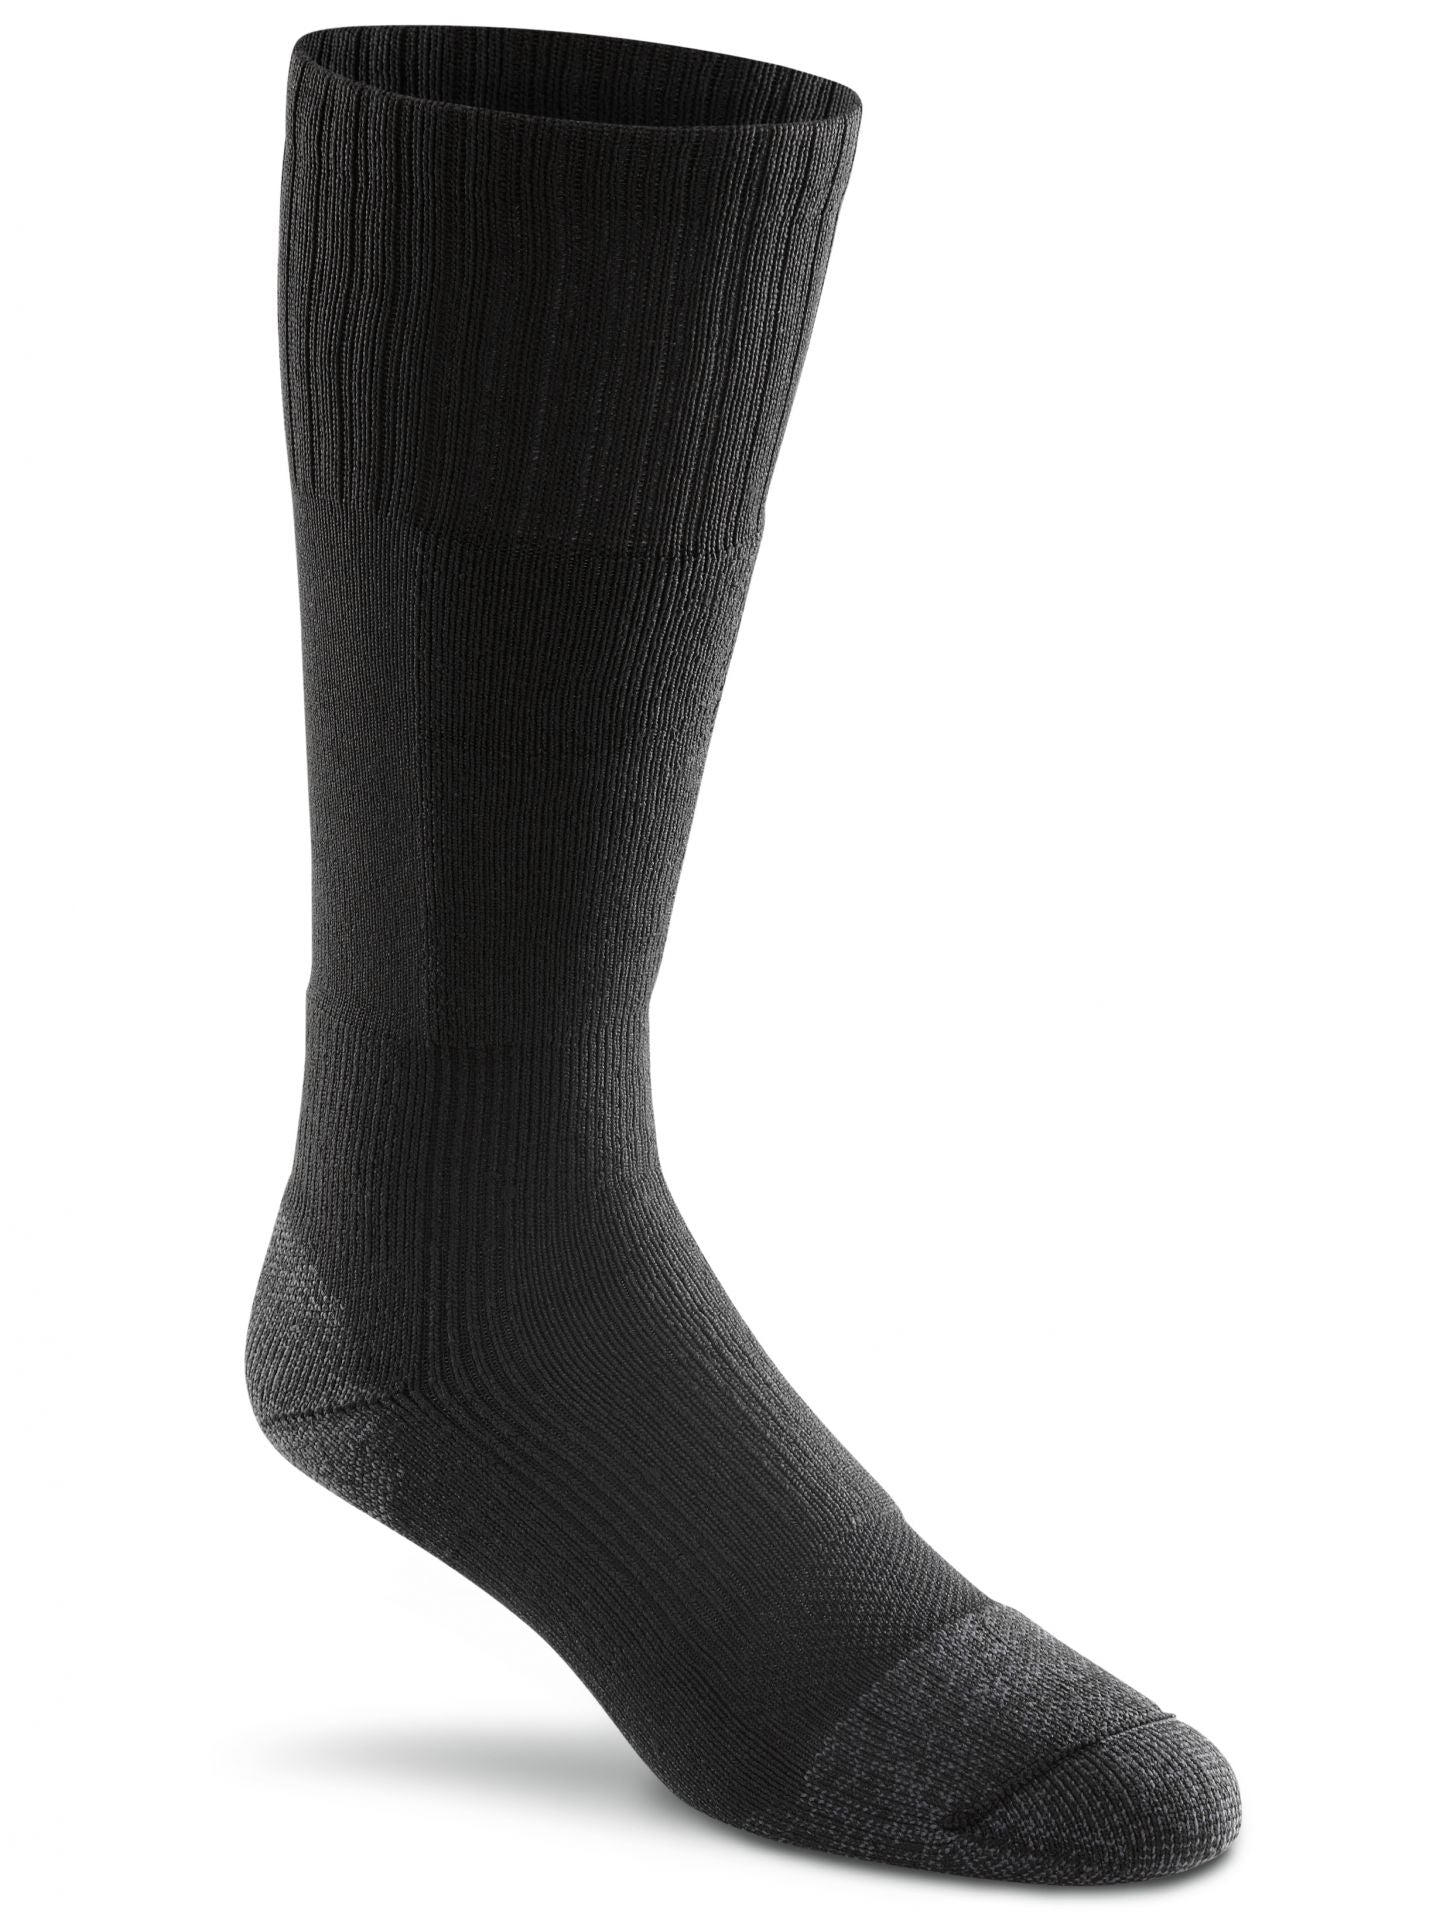 Unisex Wick Dry Maximum Crew Socks